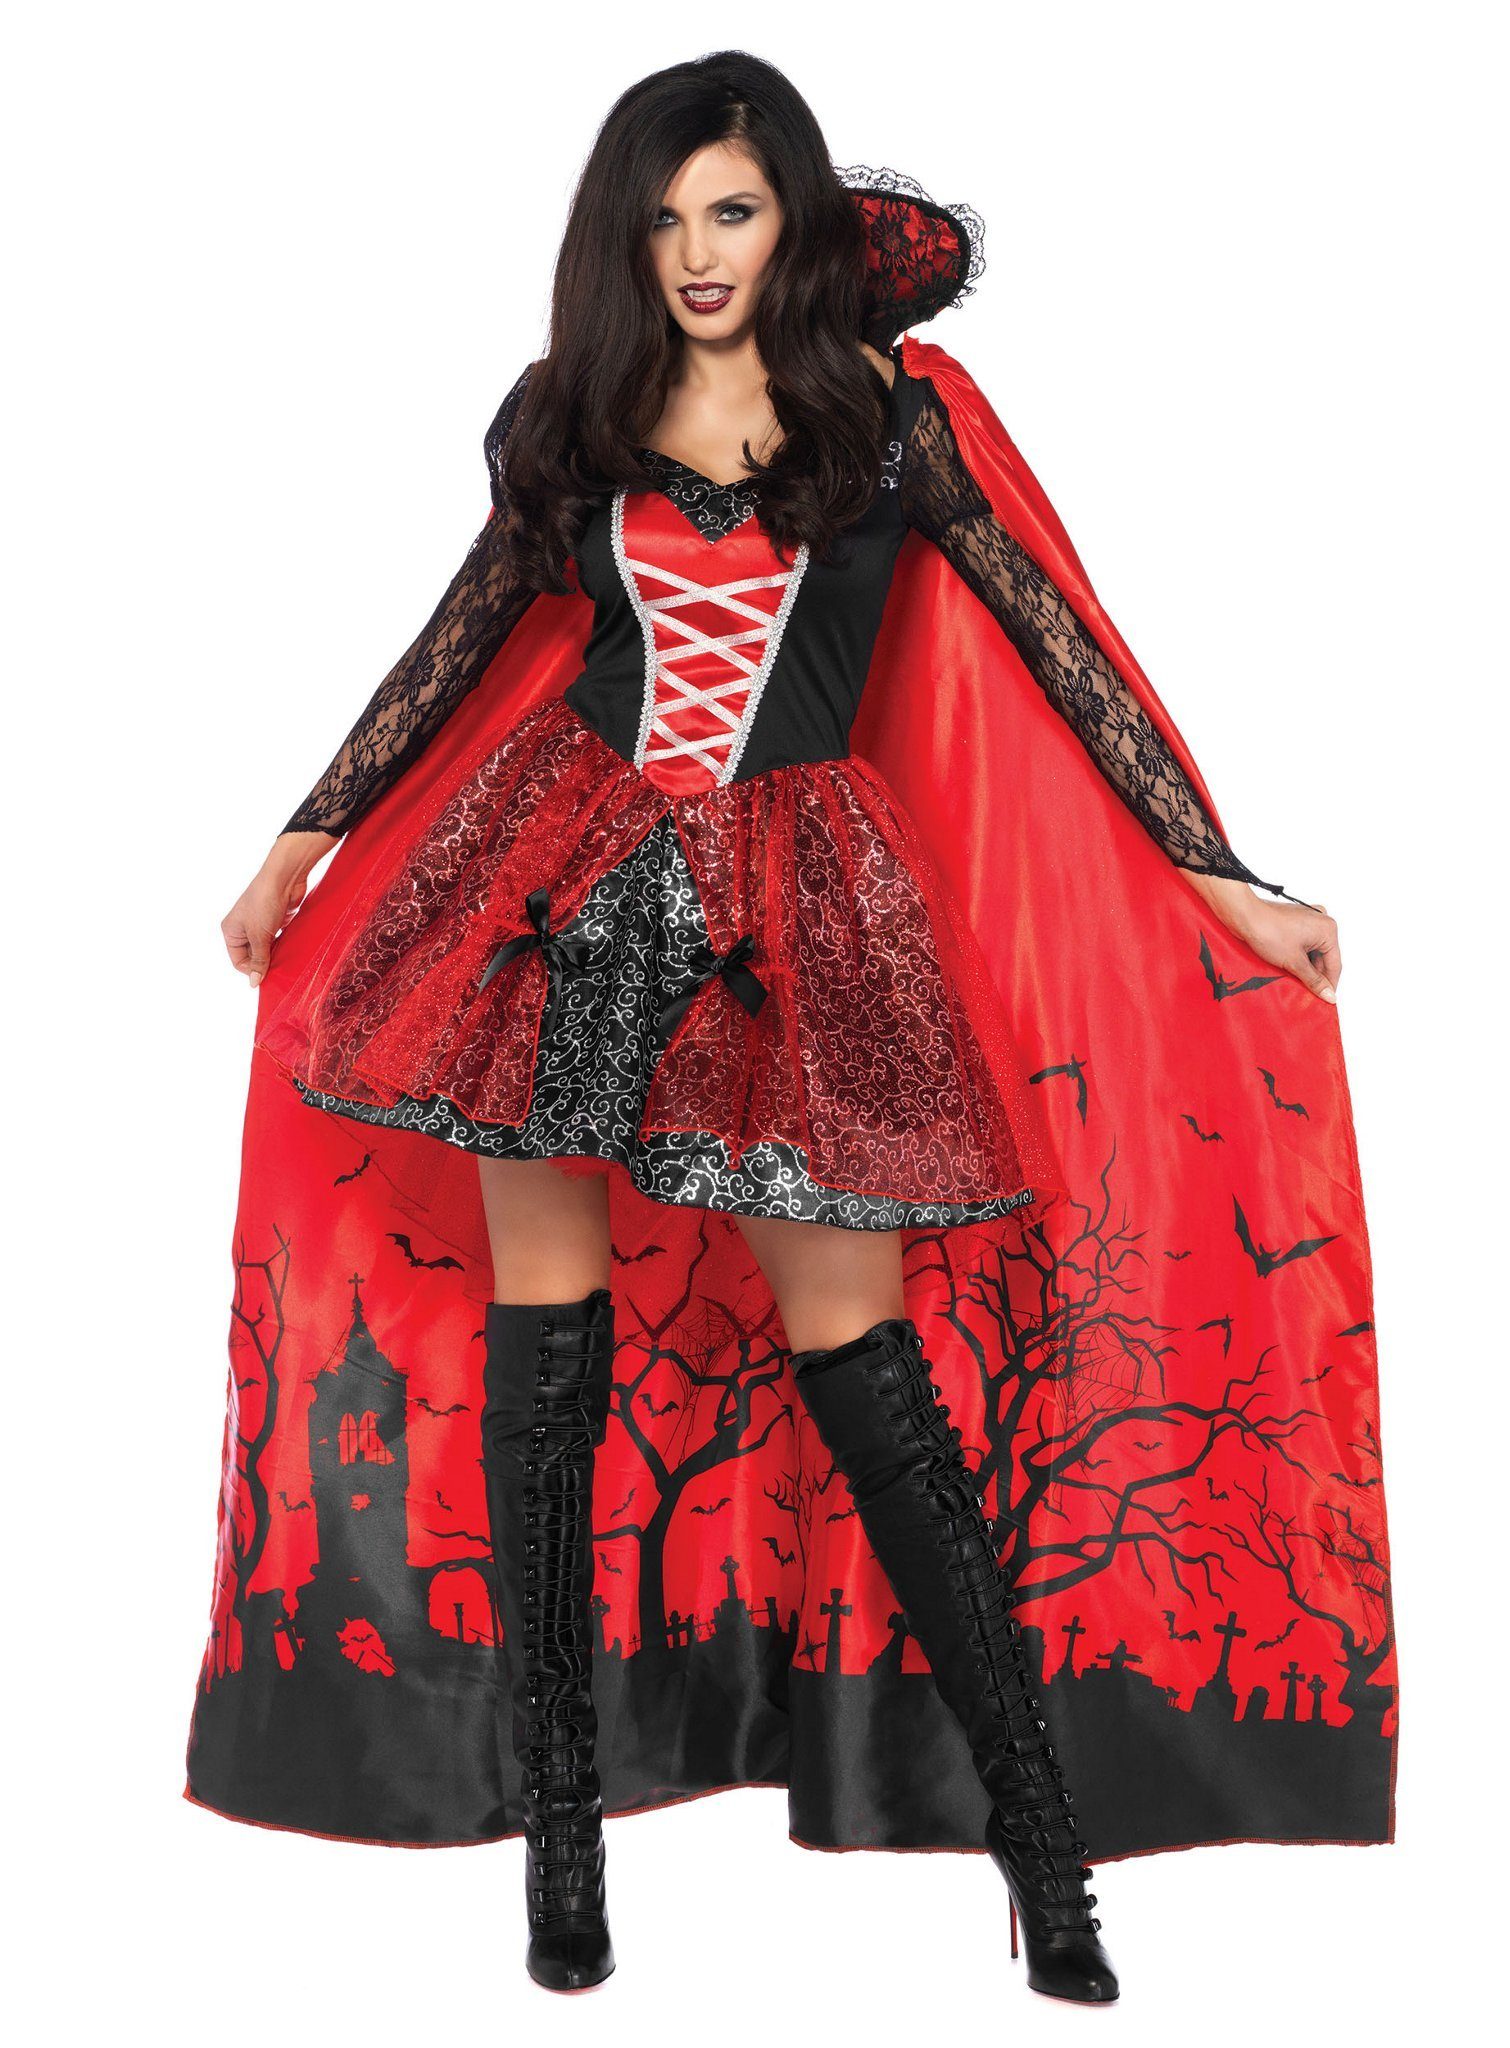 Leg Avenue Kostüm Lady Dracula, Blutrotes Vampir Kostüm für Damen